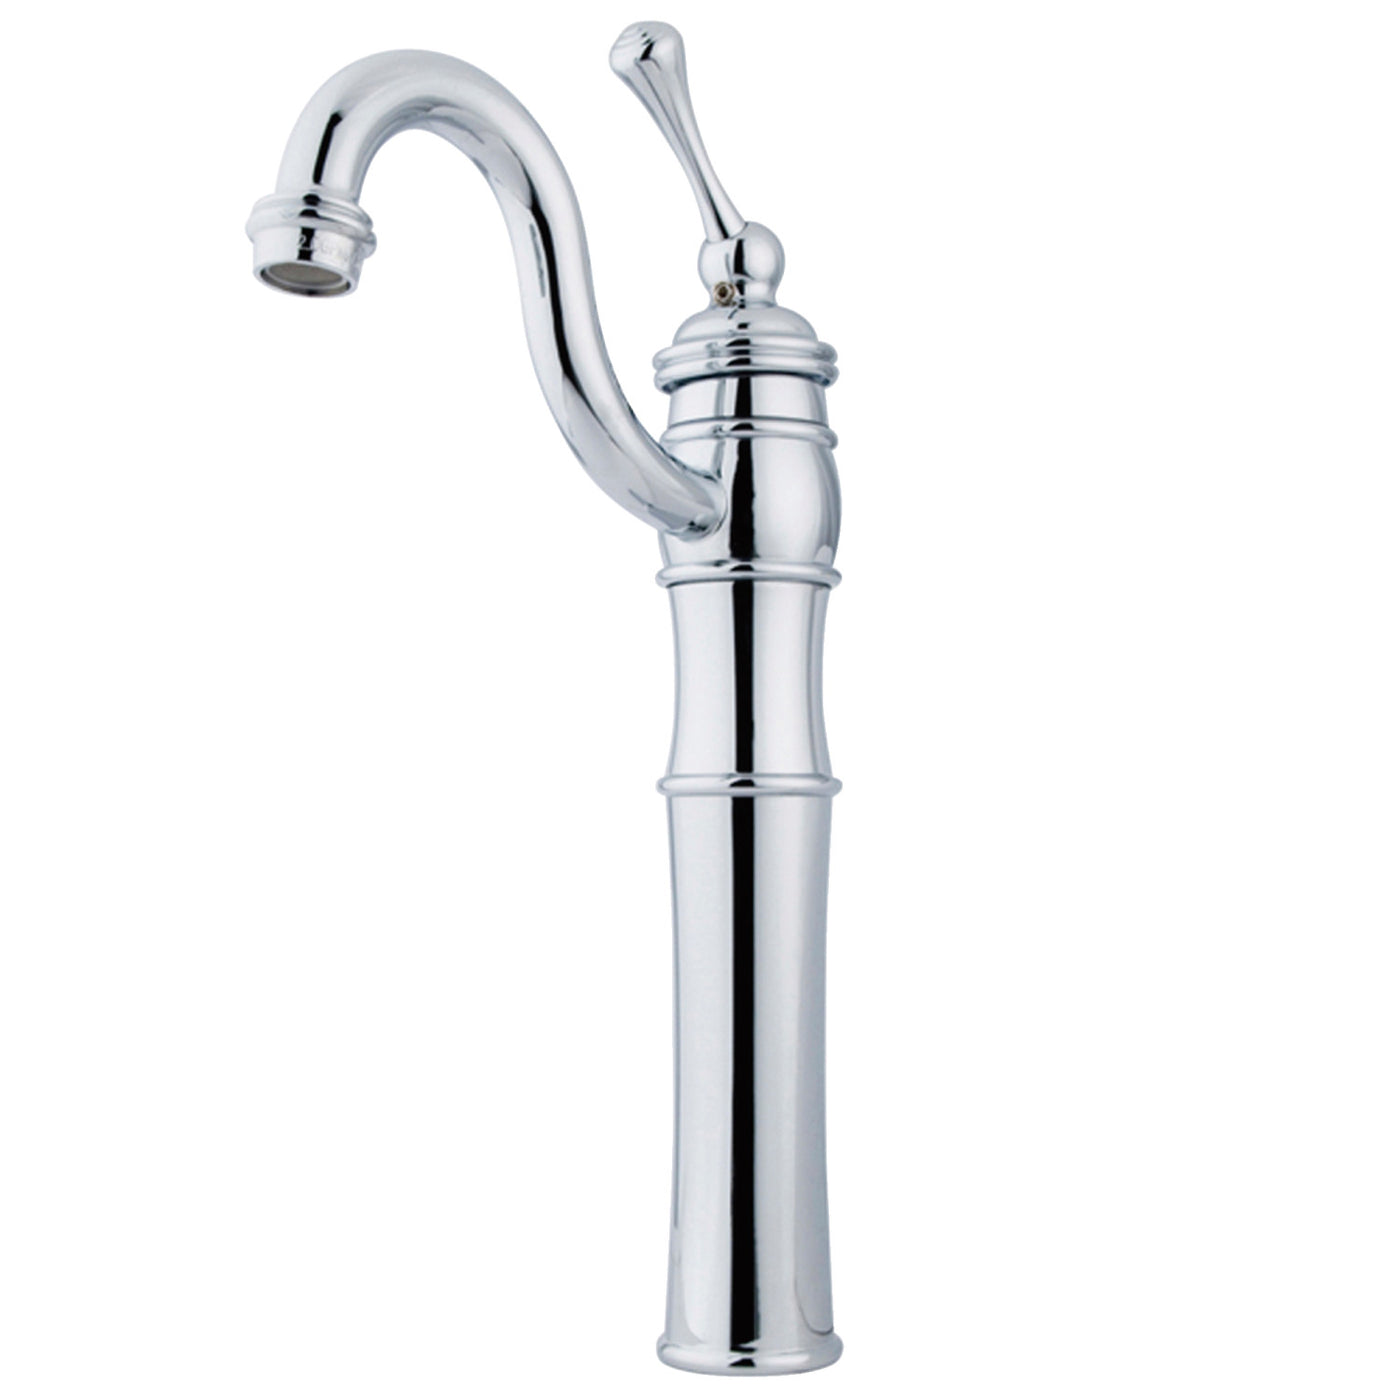 Elements of Design EB3421BL Vessel Sink Faucet, Polished Chrome